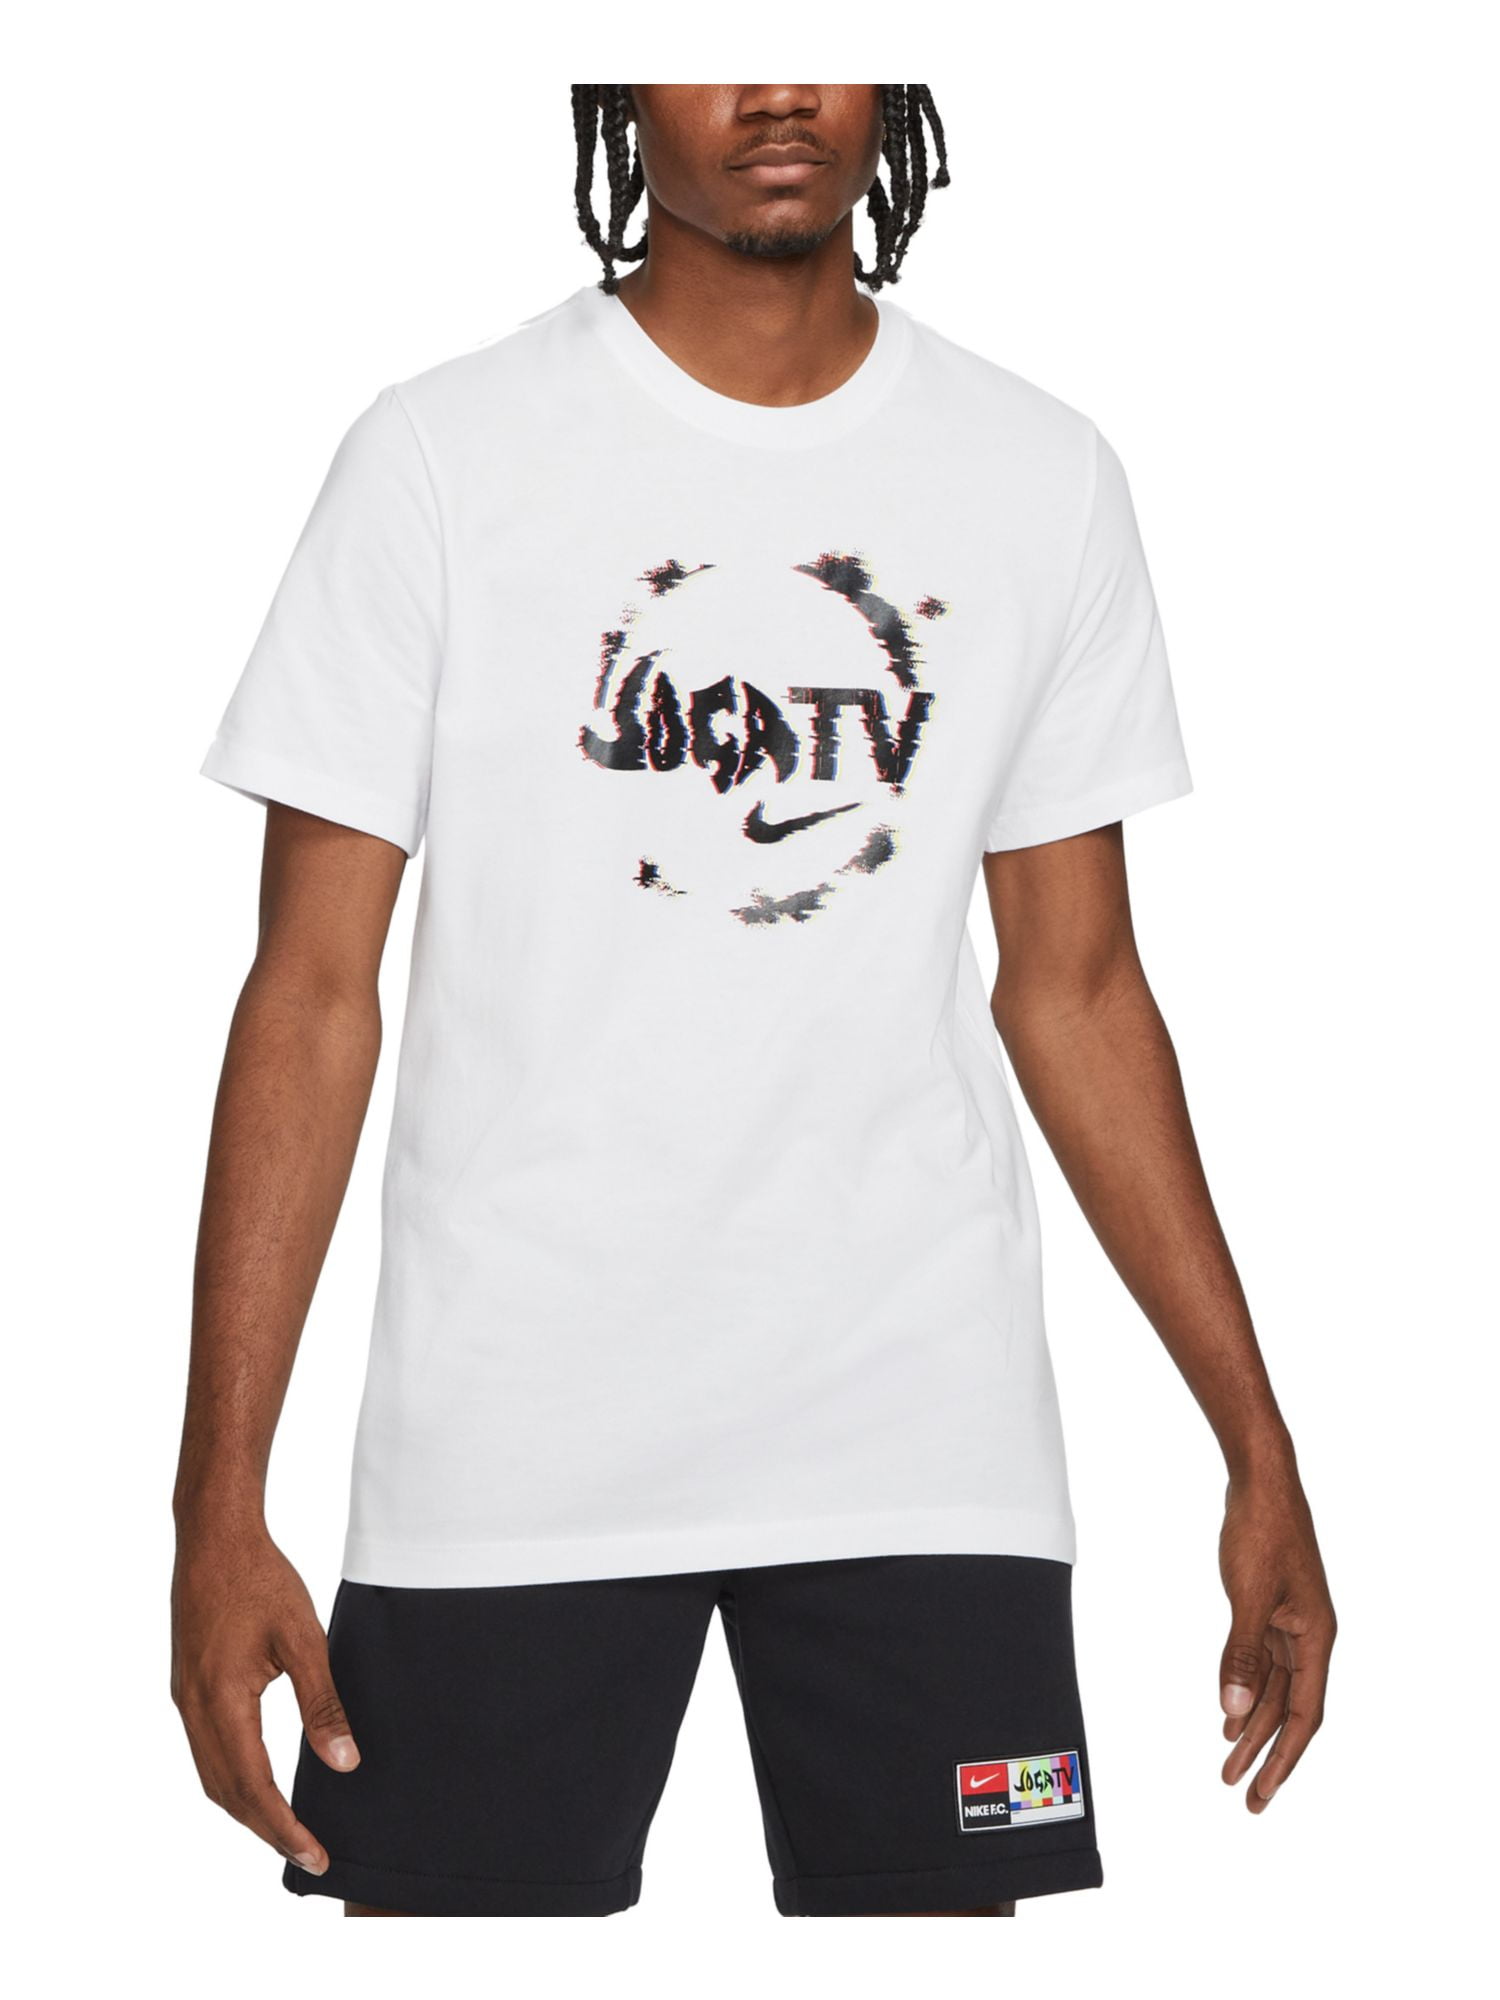 NIKE Mens Joga Tv White Graphic Classic Fit T-Shirt XXL - Walmart.com